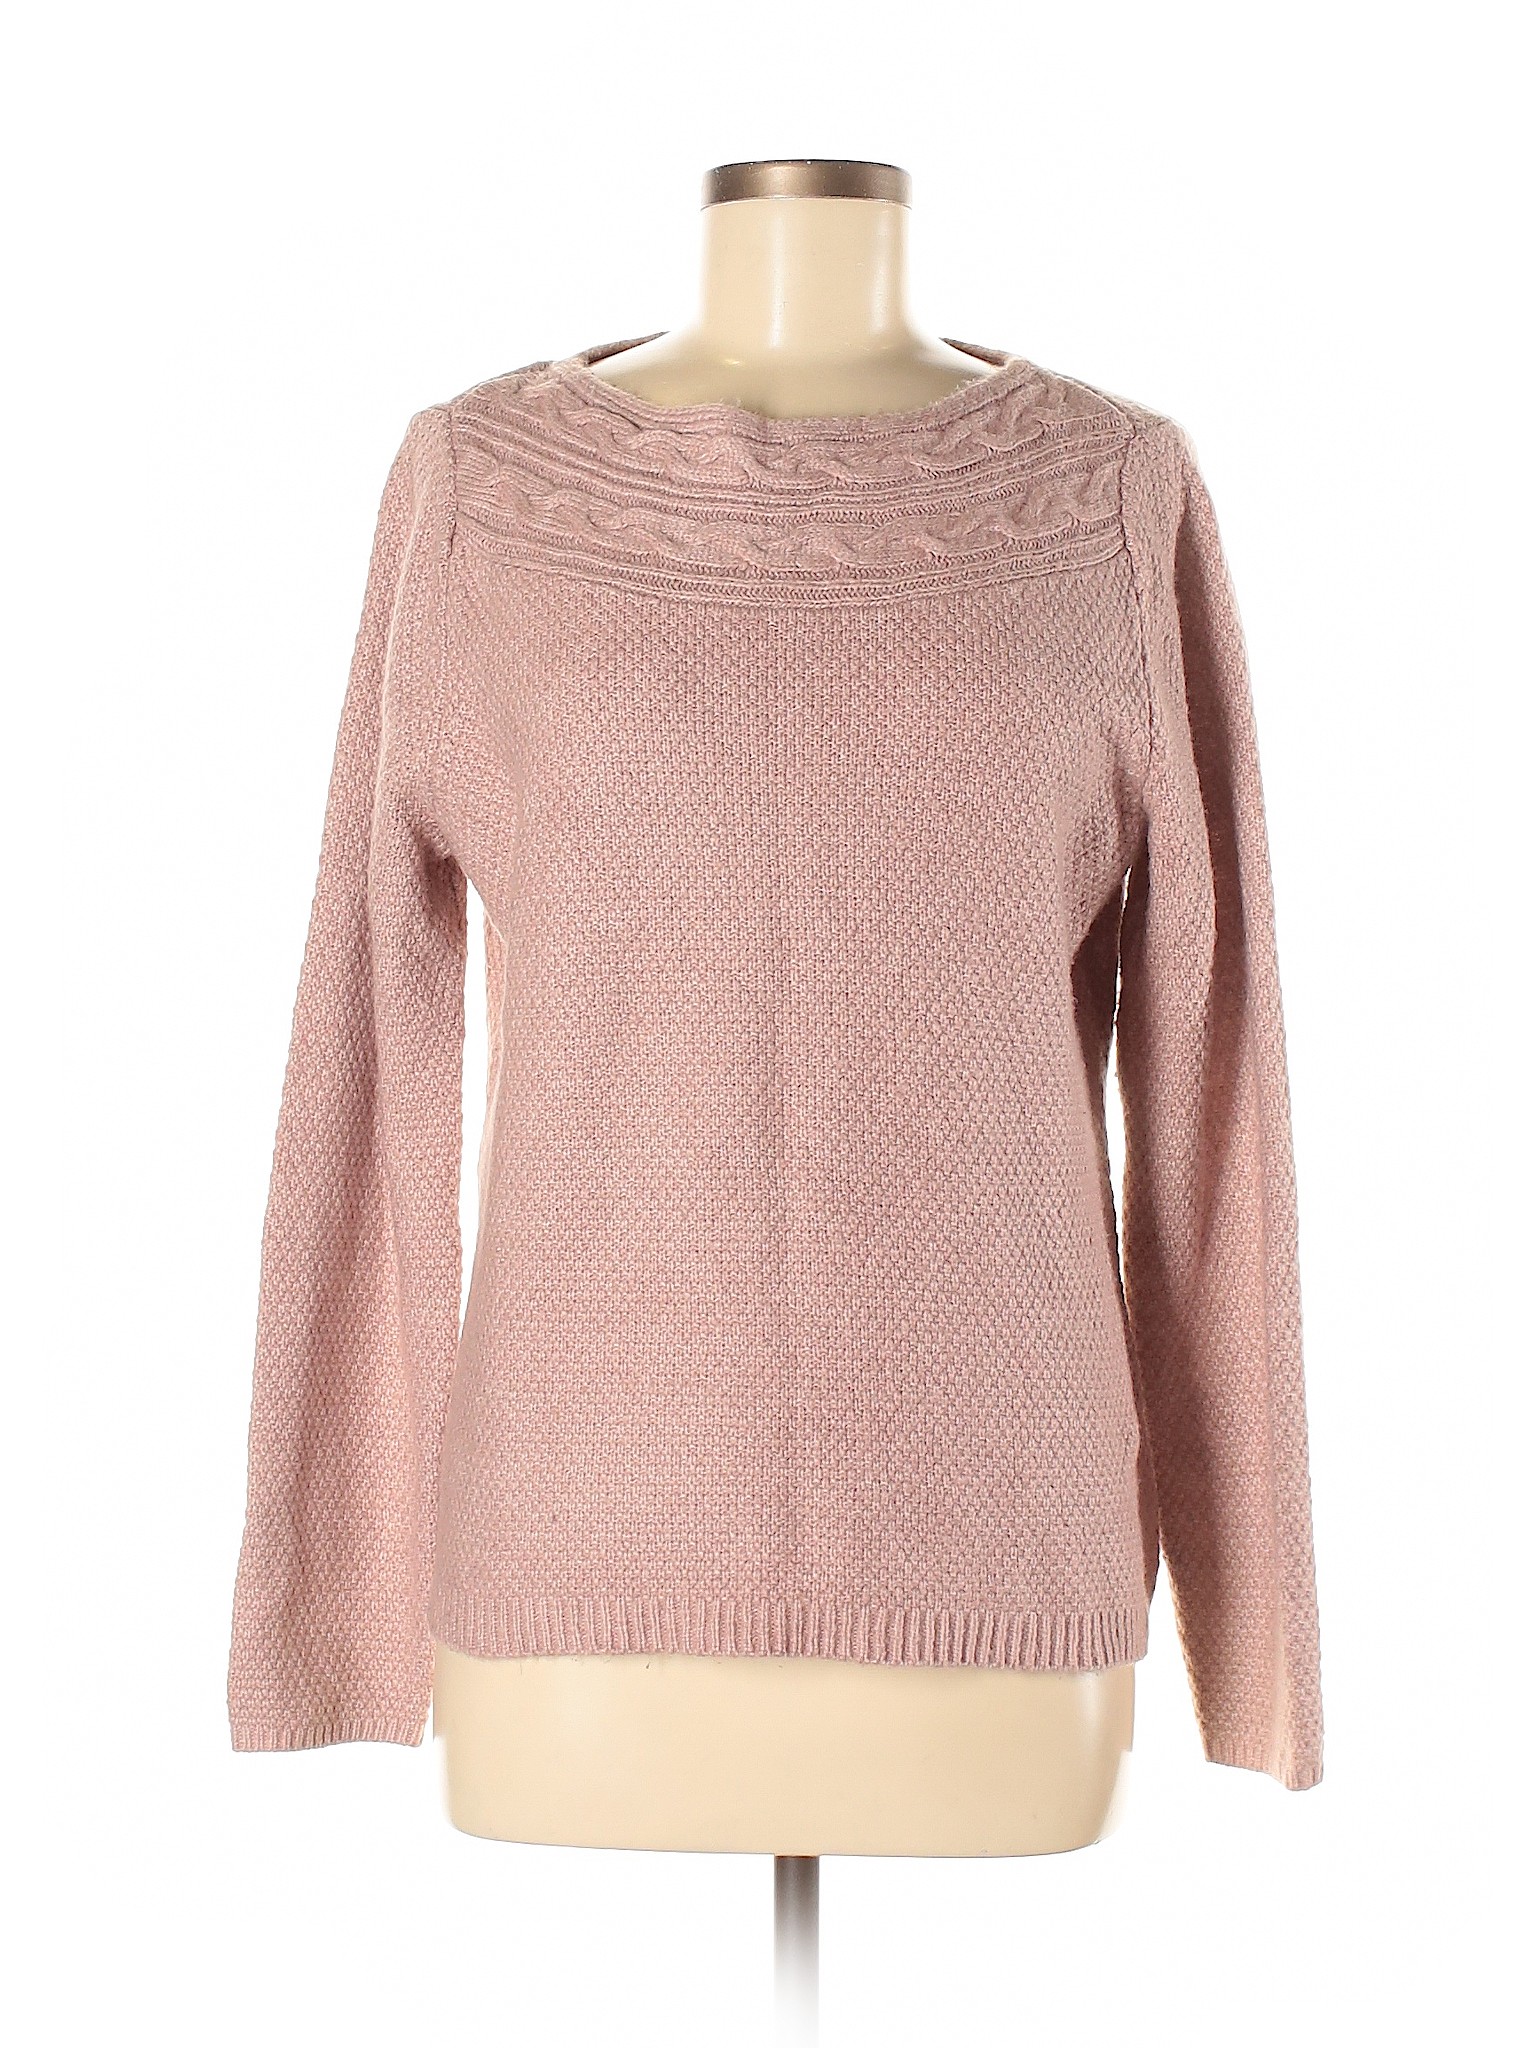 Croft & Barrow Women Pink Pullover Sweater M | eBay